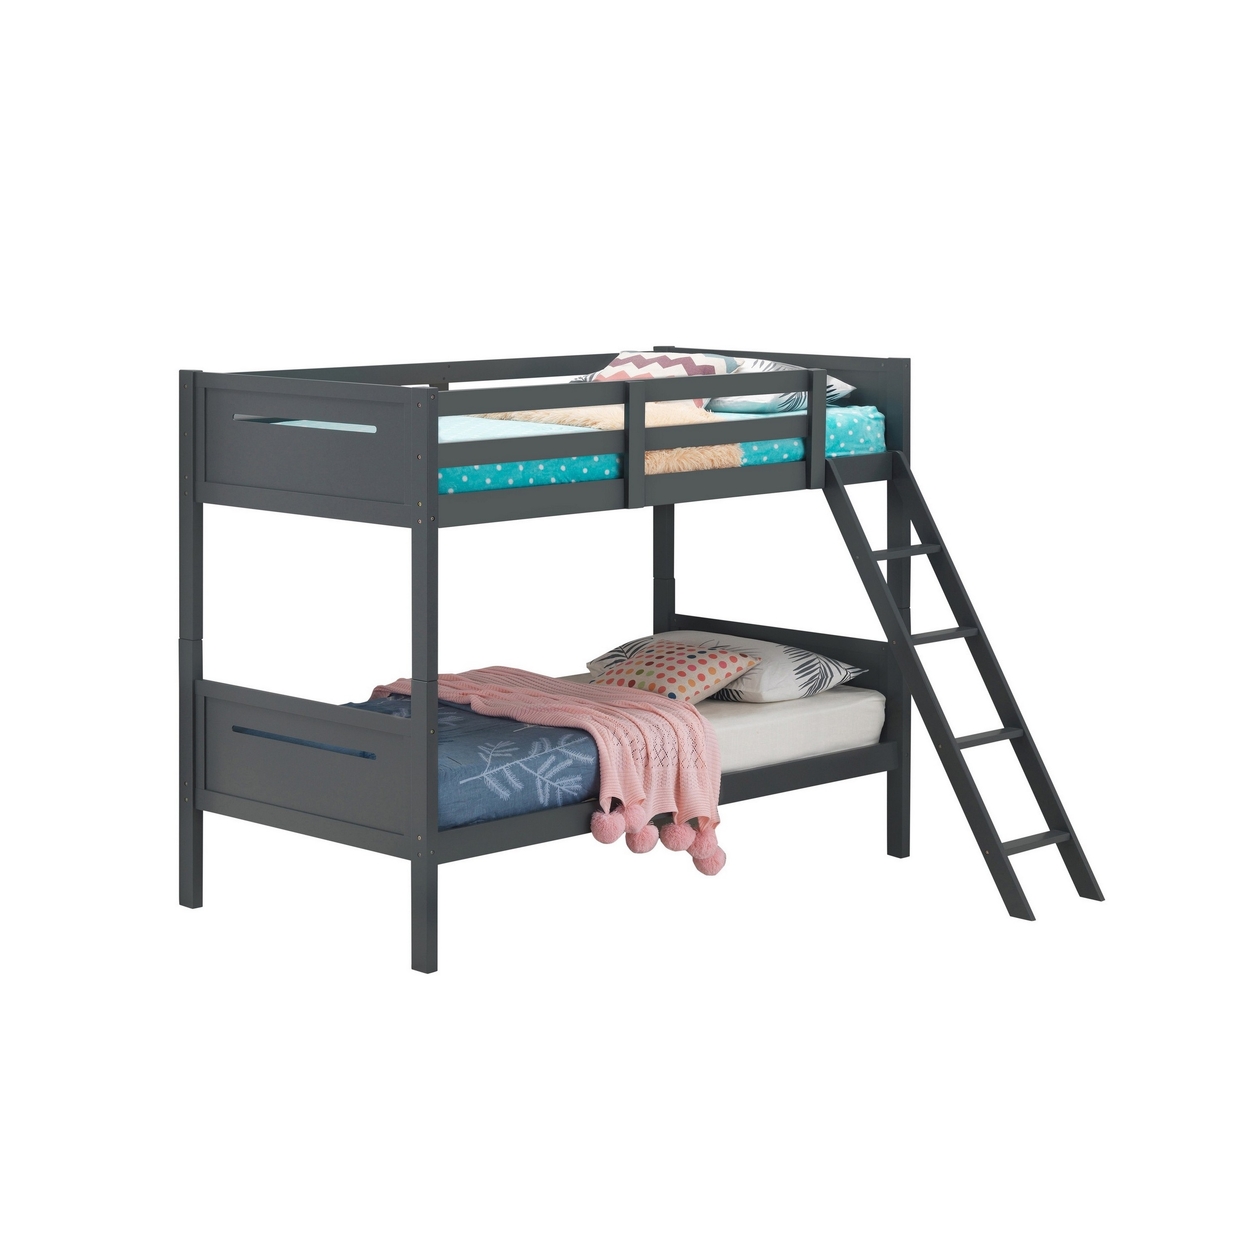 Amey Wood Twin Bunk Bed With Angled Ladder, Guardrail, Slat Kit, Gray- Saltoro Sherpi